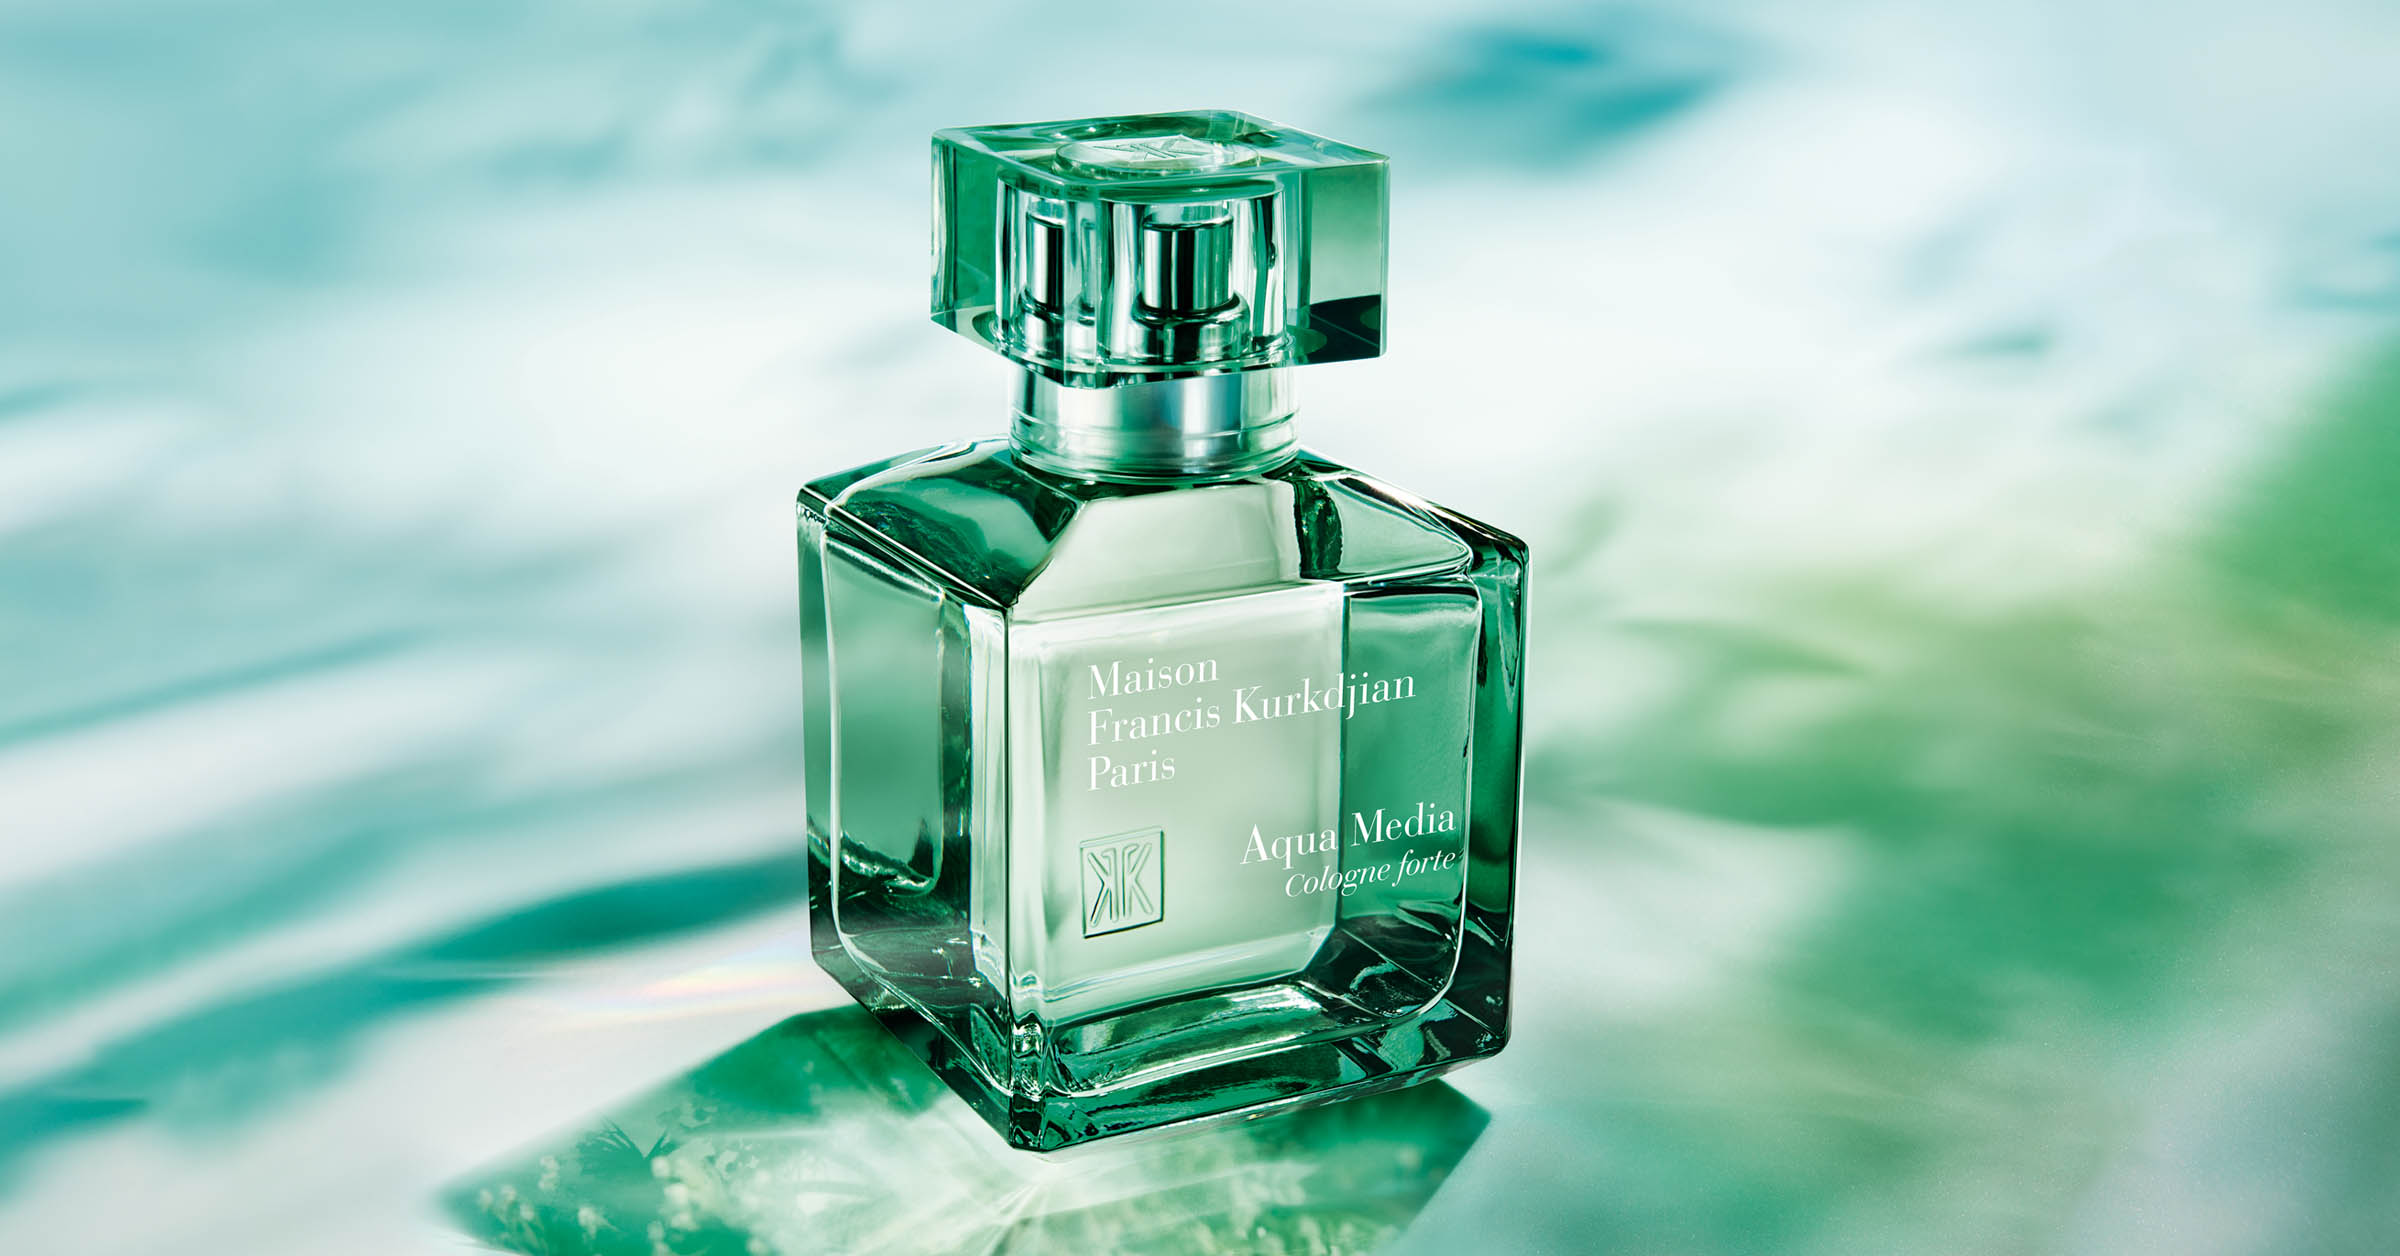 How to Pronounce Maison Francis Kurkdjian (French Perfume) 